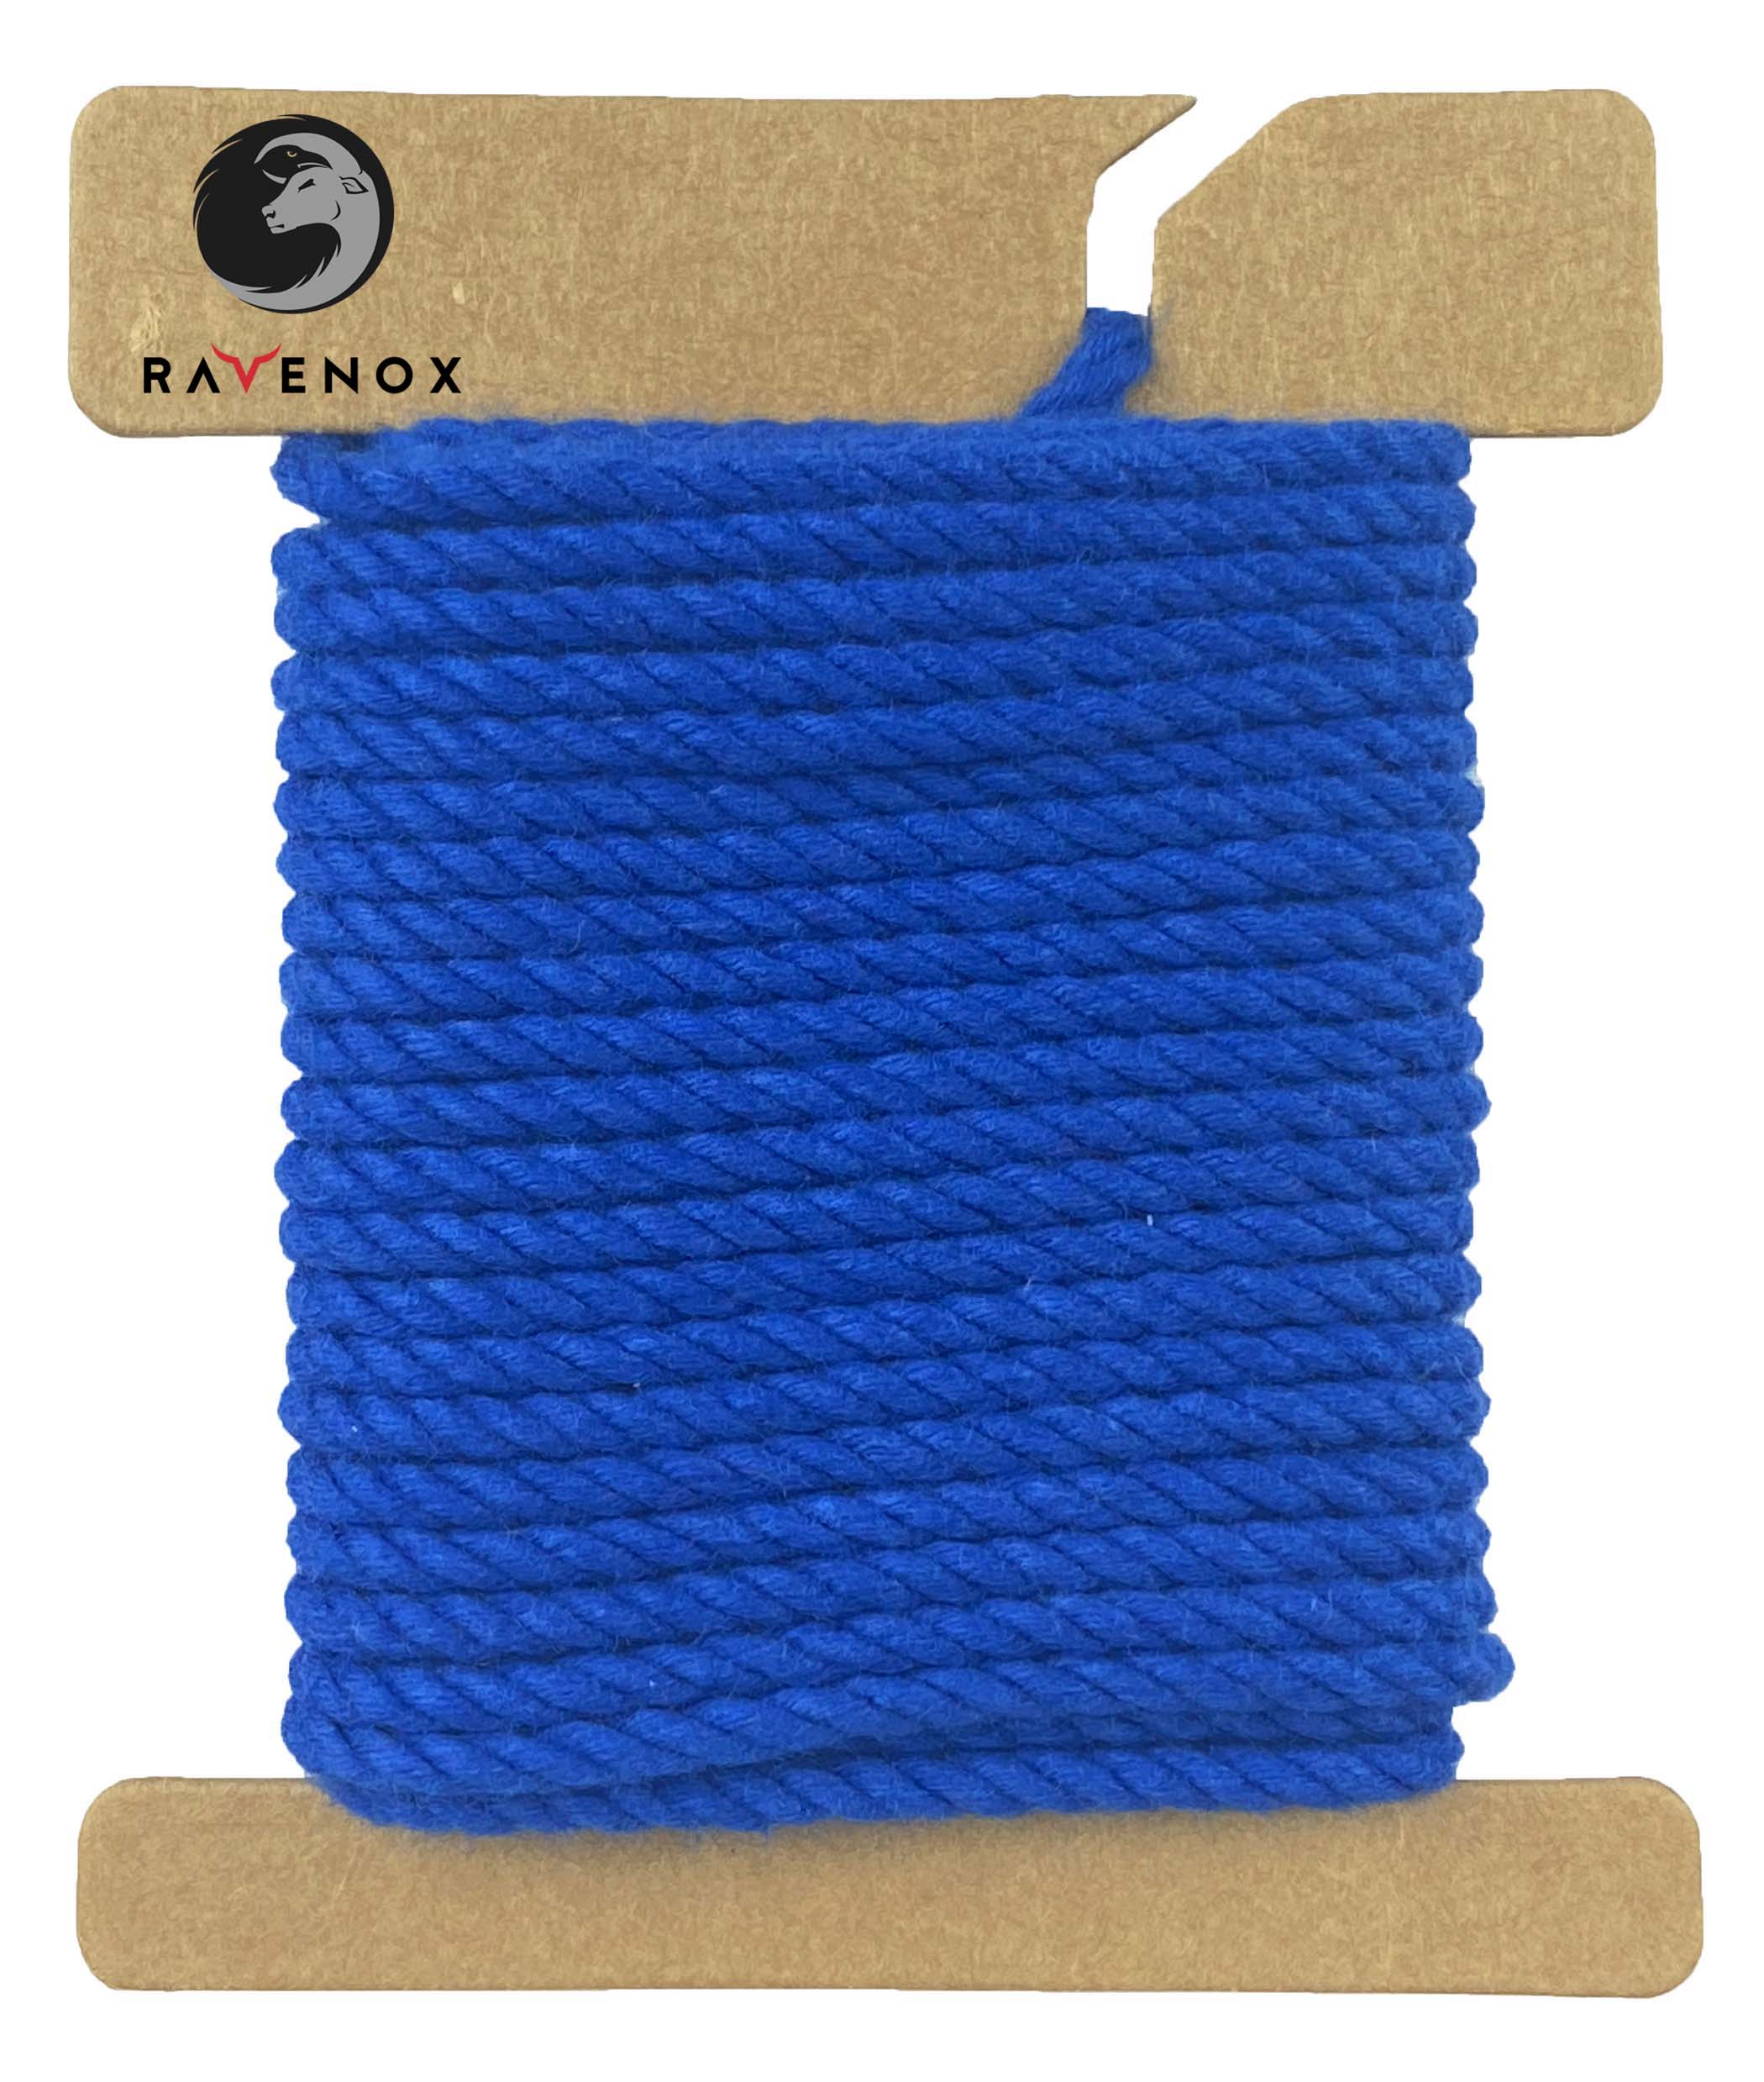 Ravenox Royal Blue Cotton Macramé Cord | Cordage for Macramé Projects 5 mm x 8 Yards